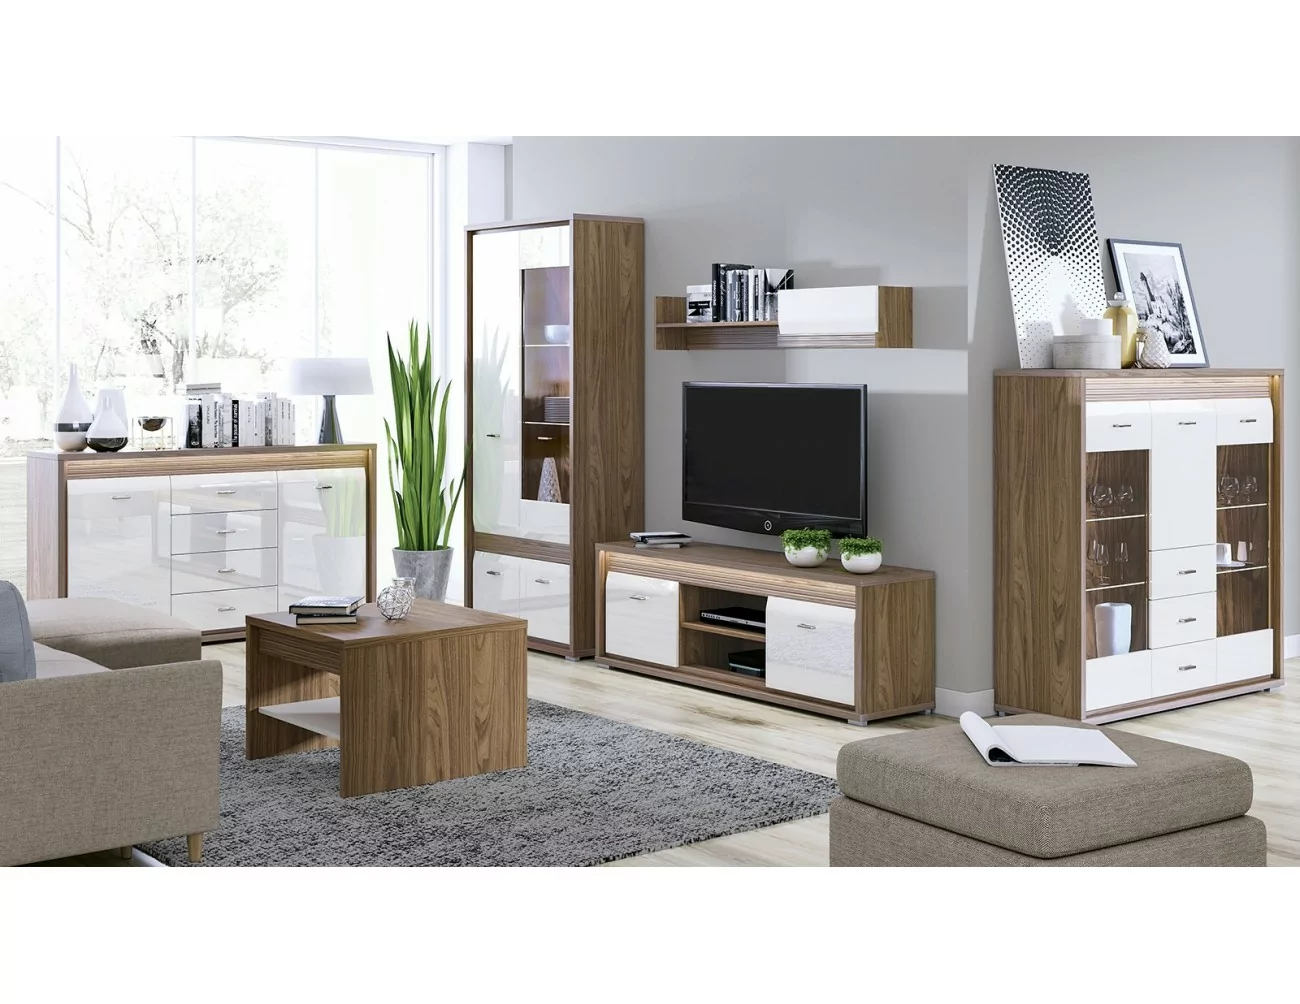 Dalia Collection - J&B Furniture